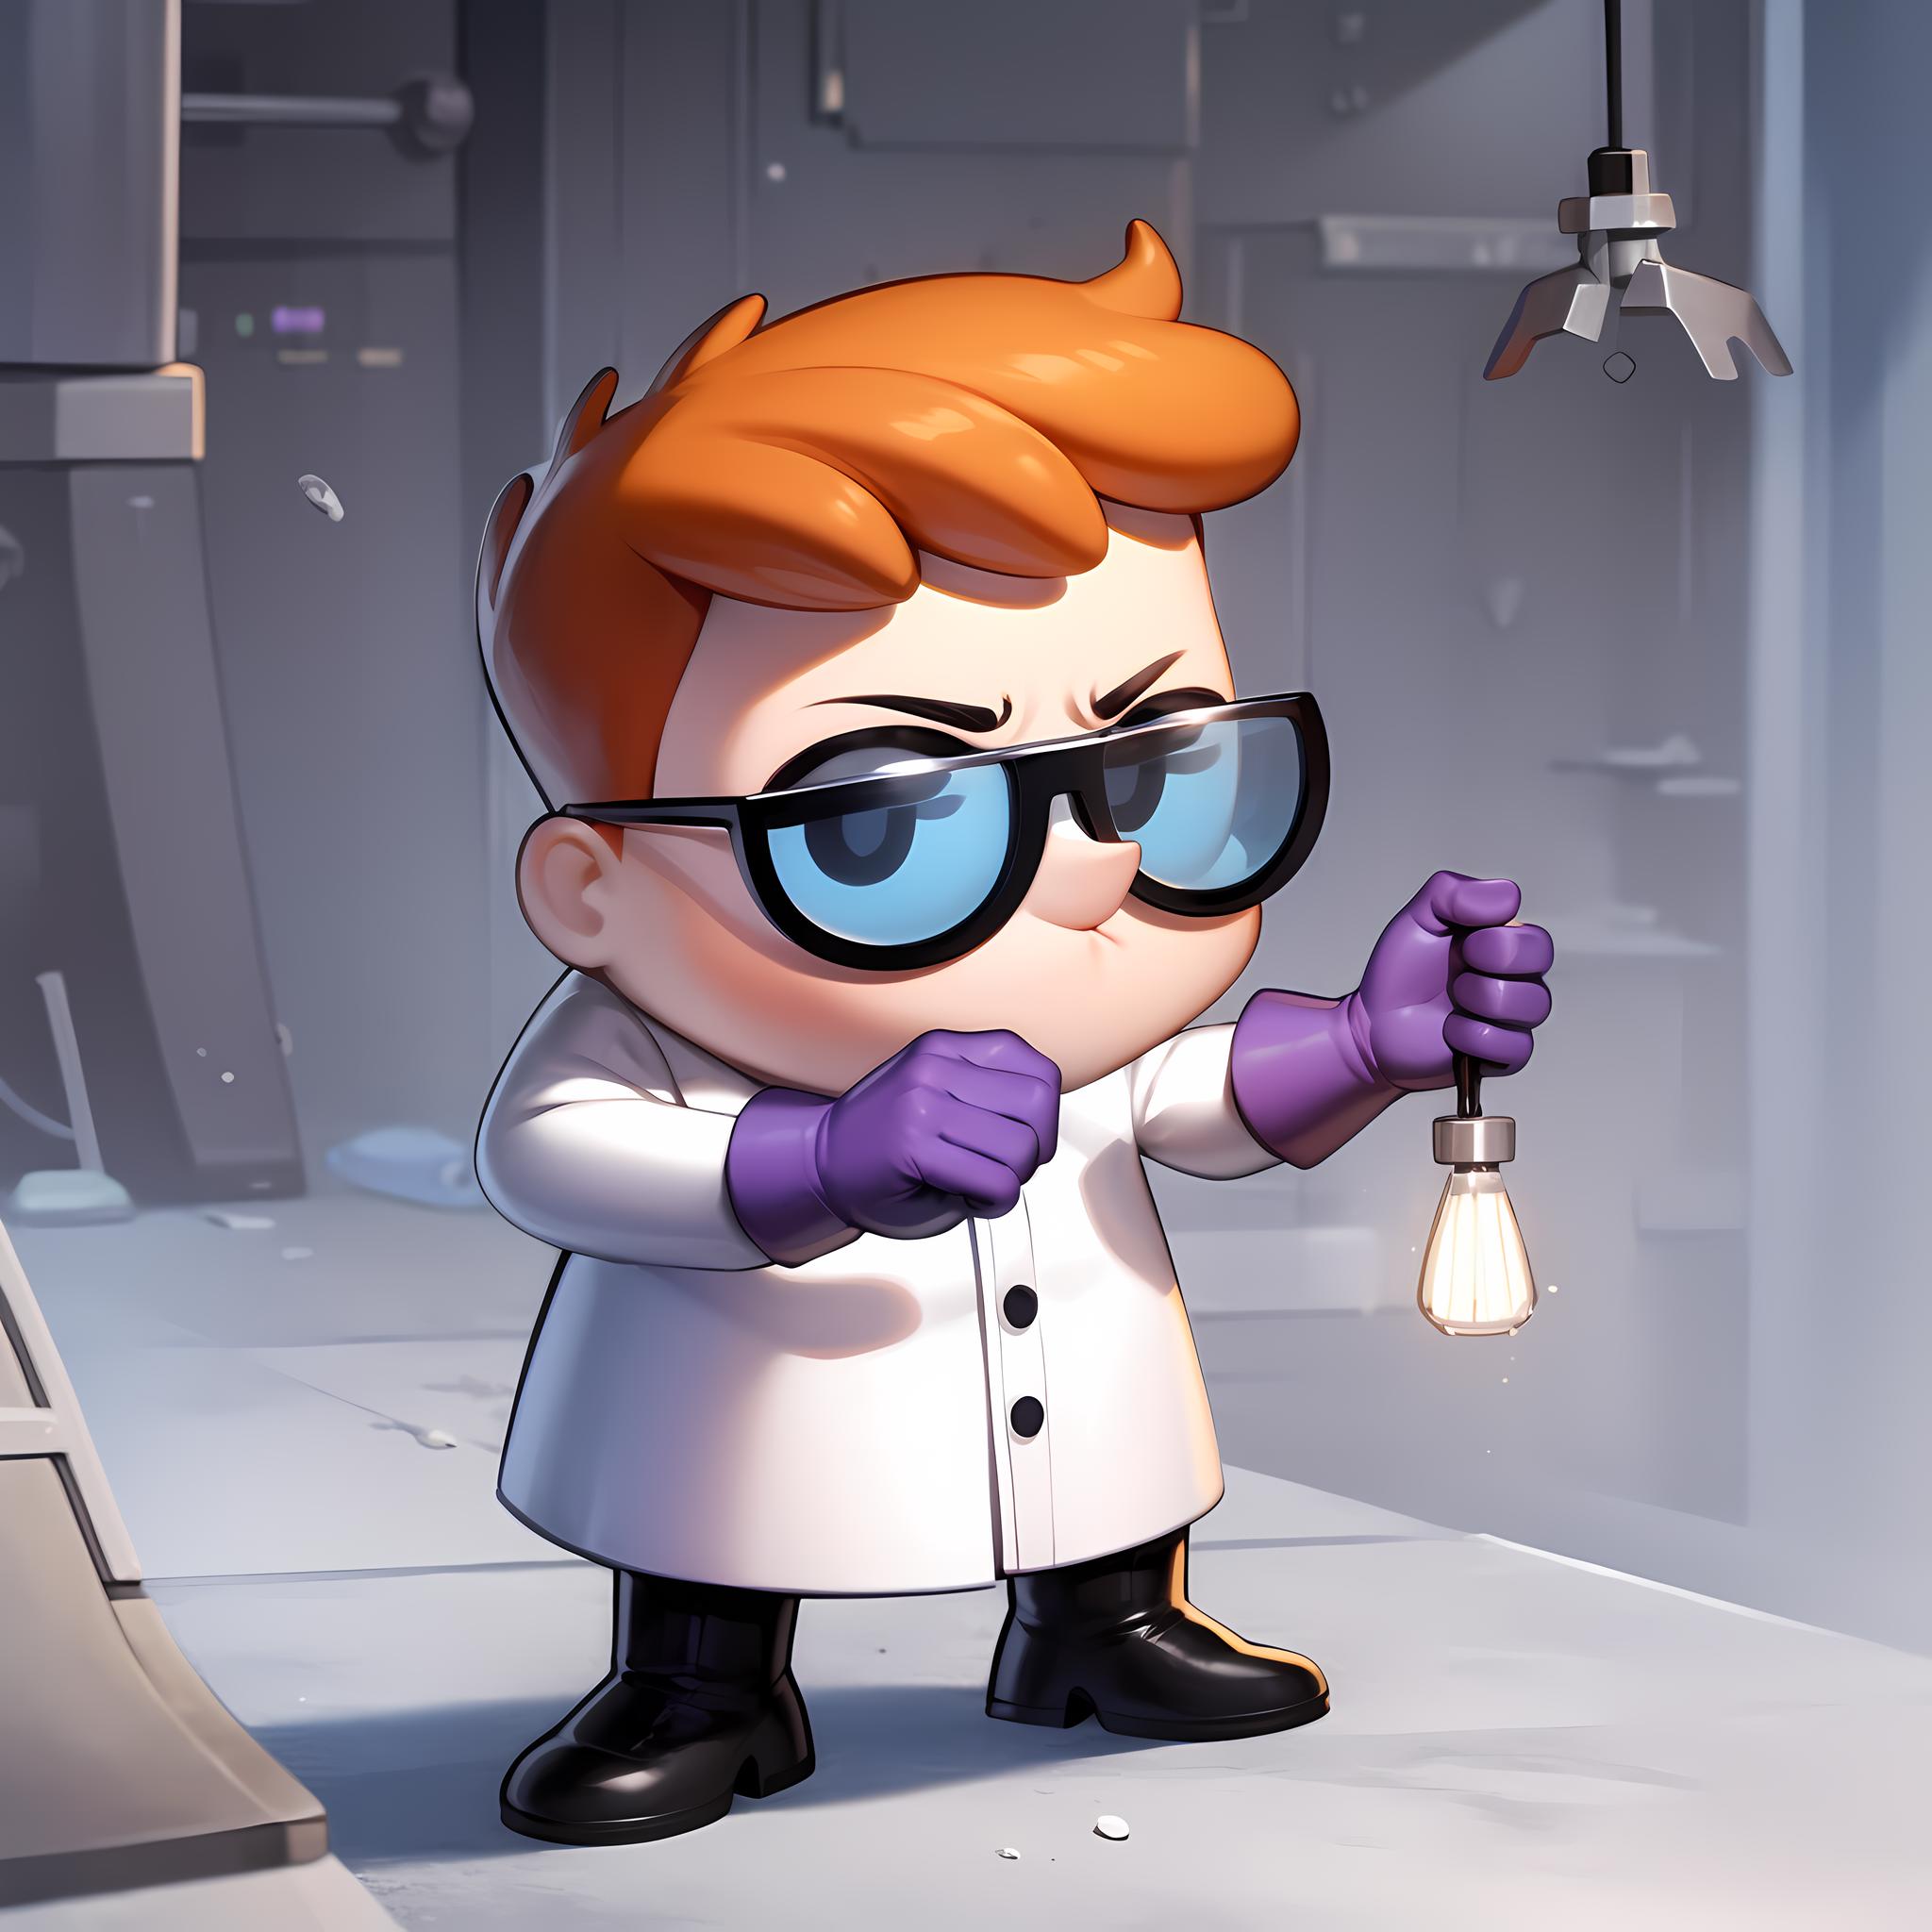 Dexter [dexter's laboratory] image by TheGooder